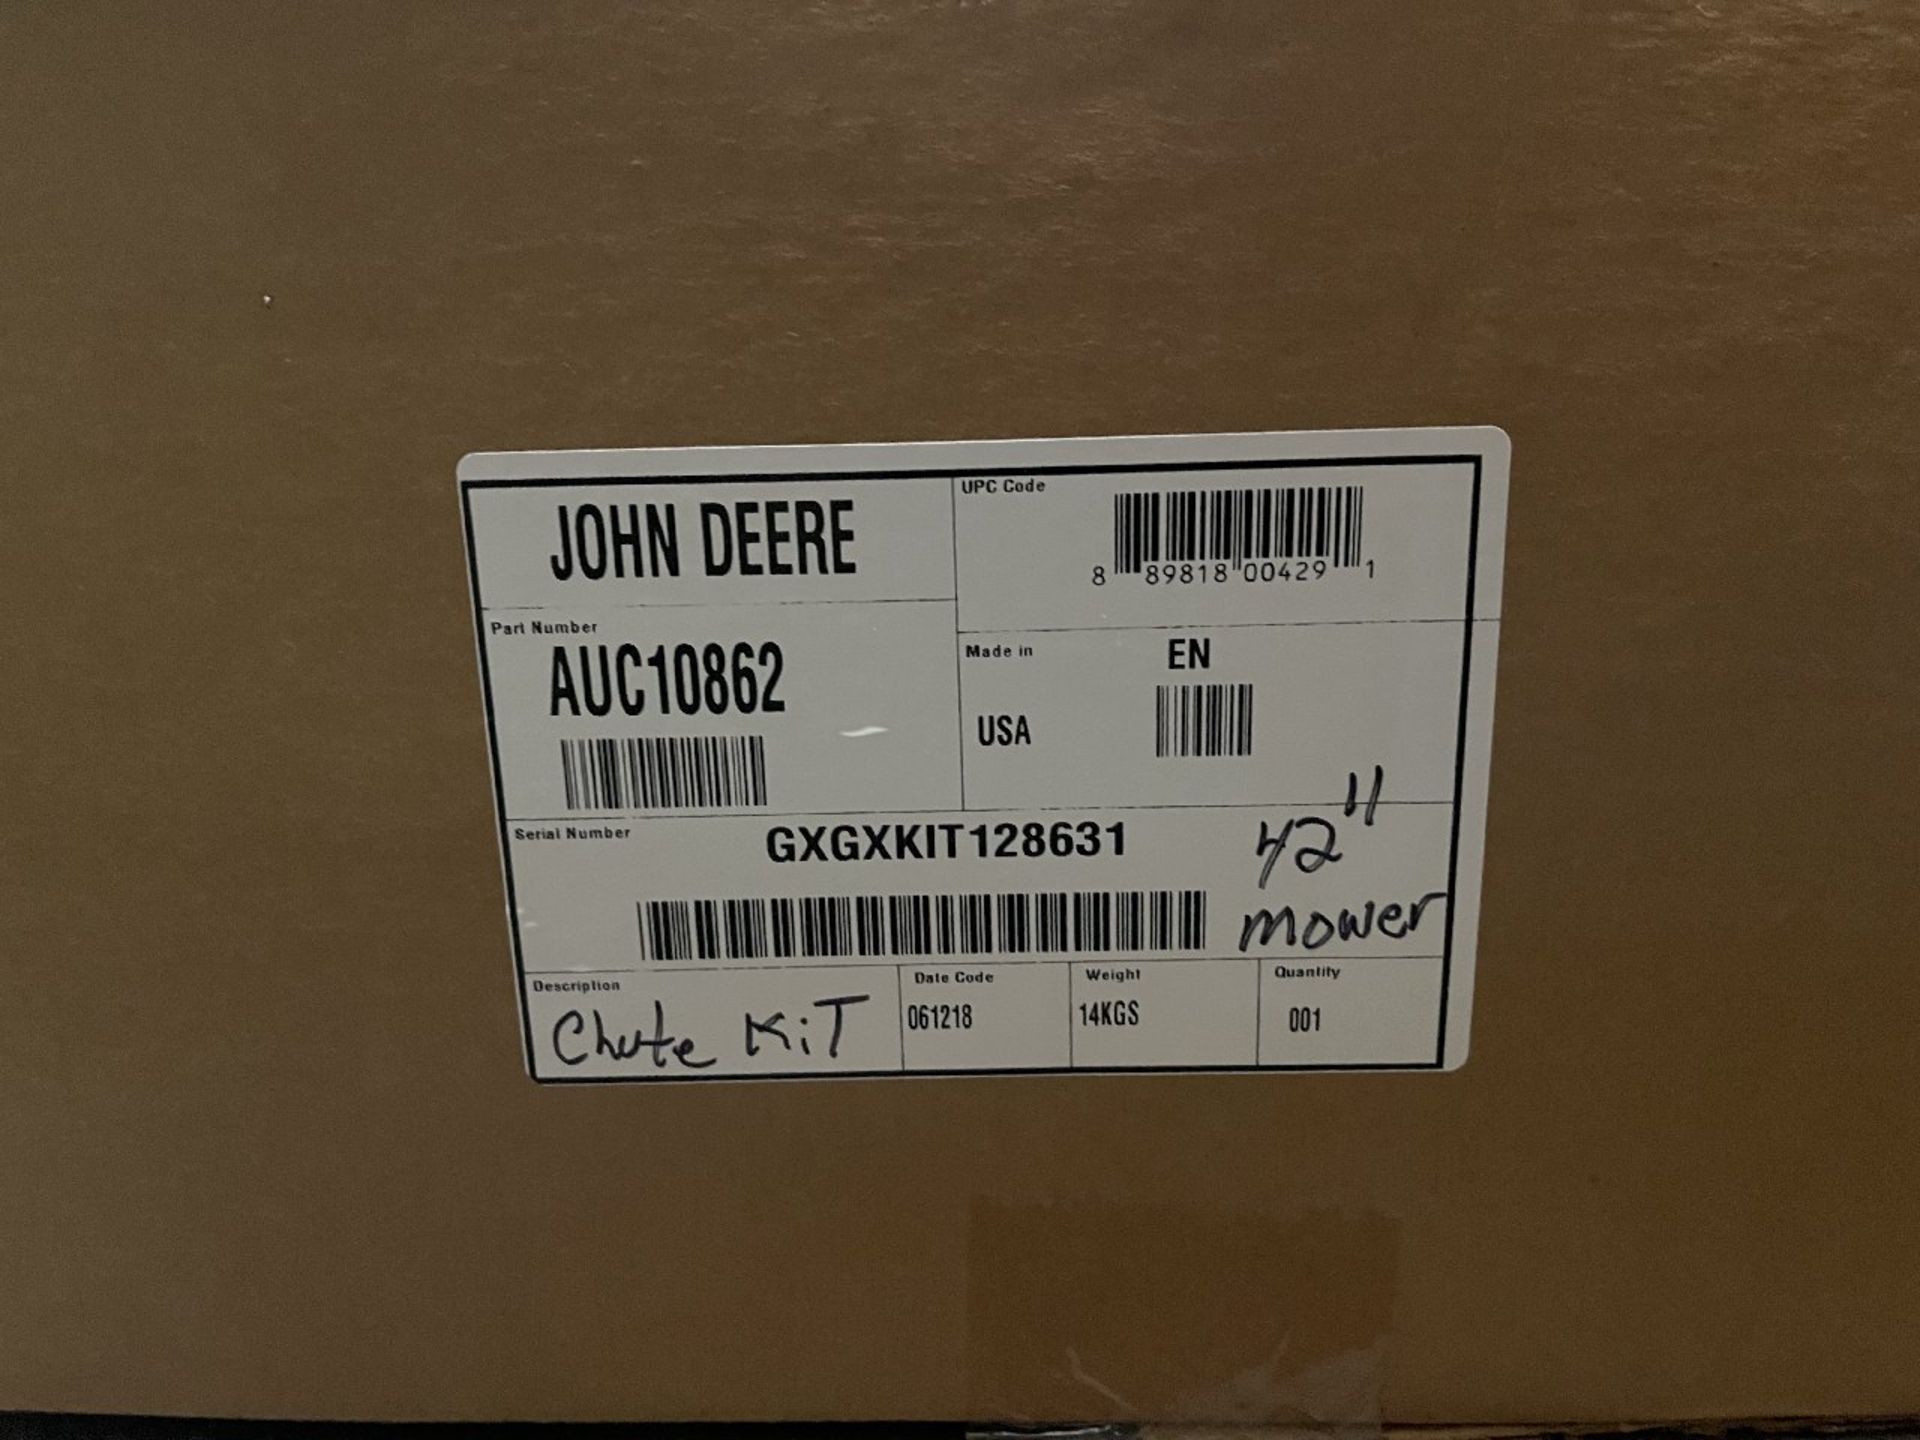 John Deere 42" Chute Kit - Image 3 of 3